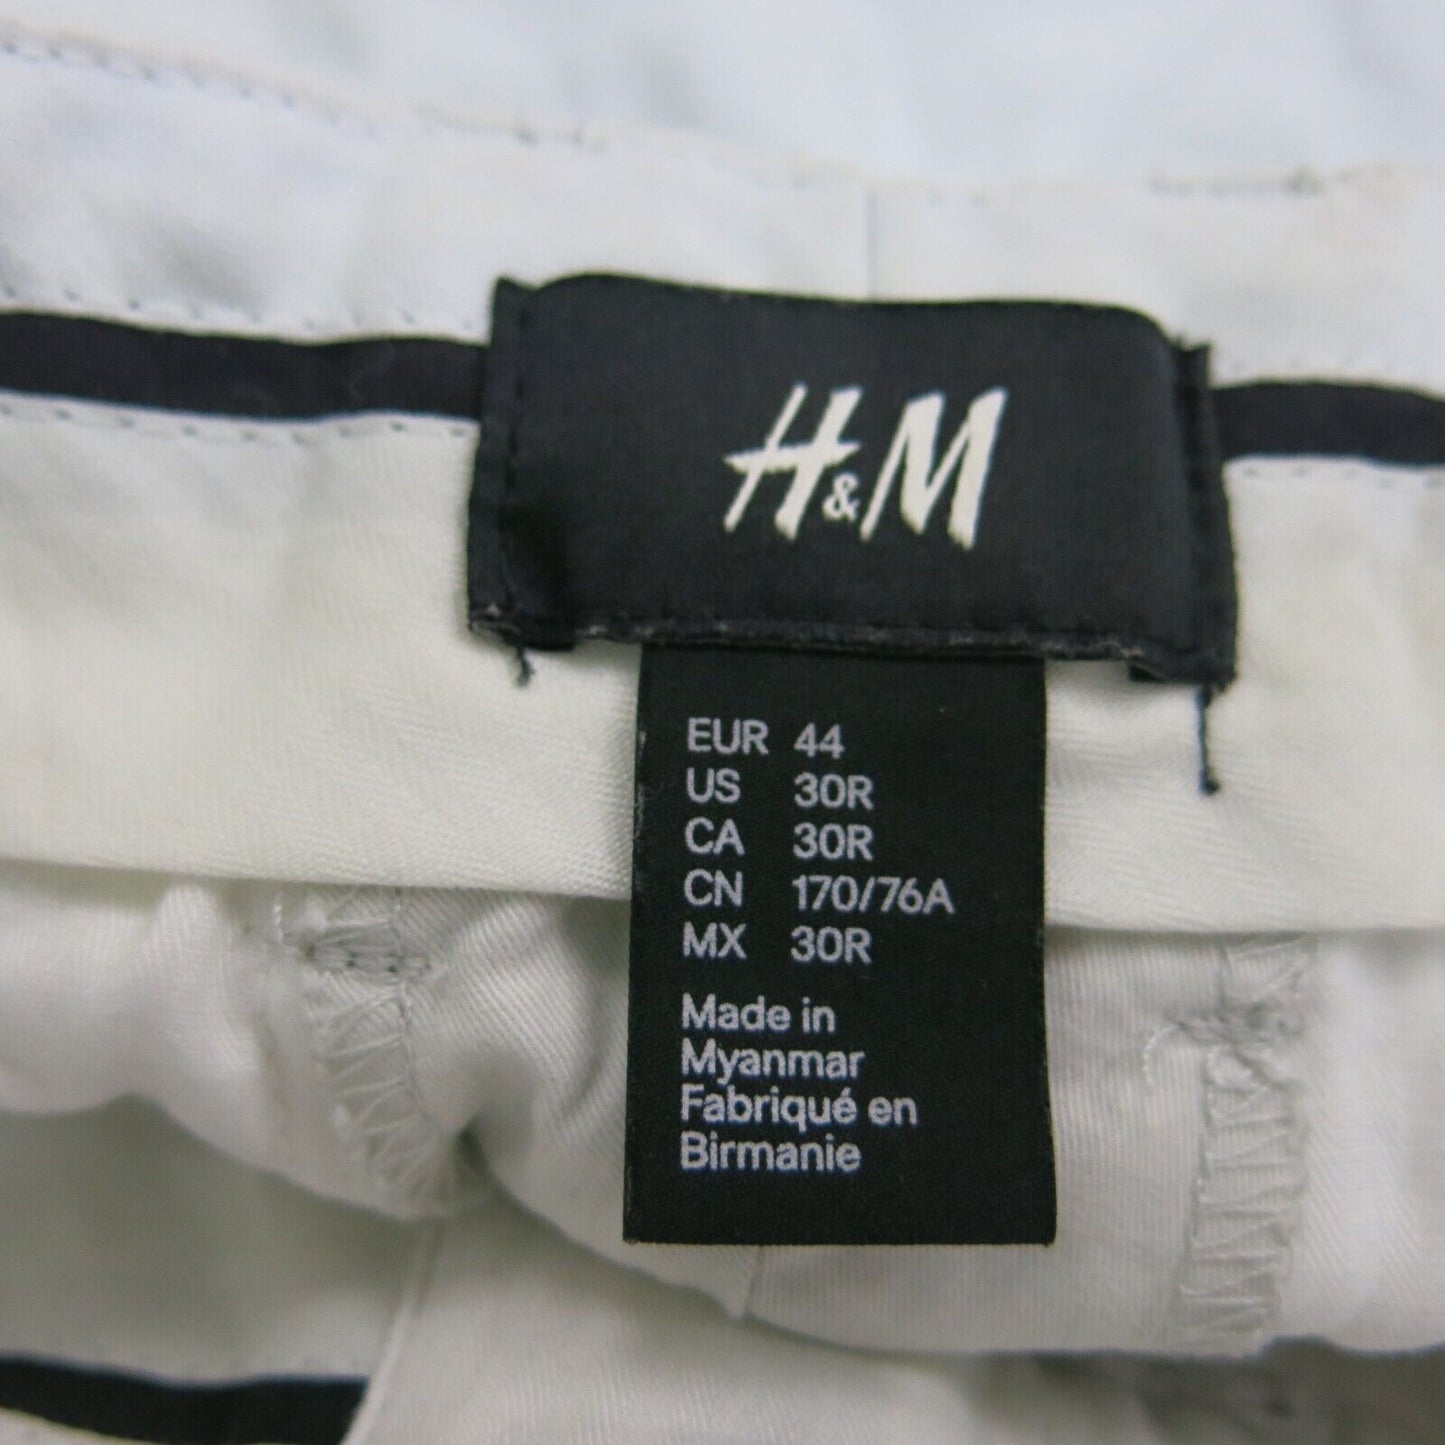 H&M Womens Chino Shorts High Rise Slash Pockets Light White Size 30 Regular